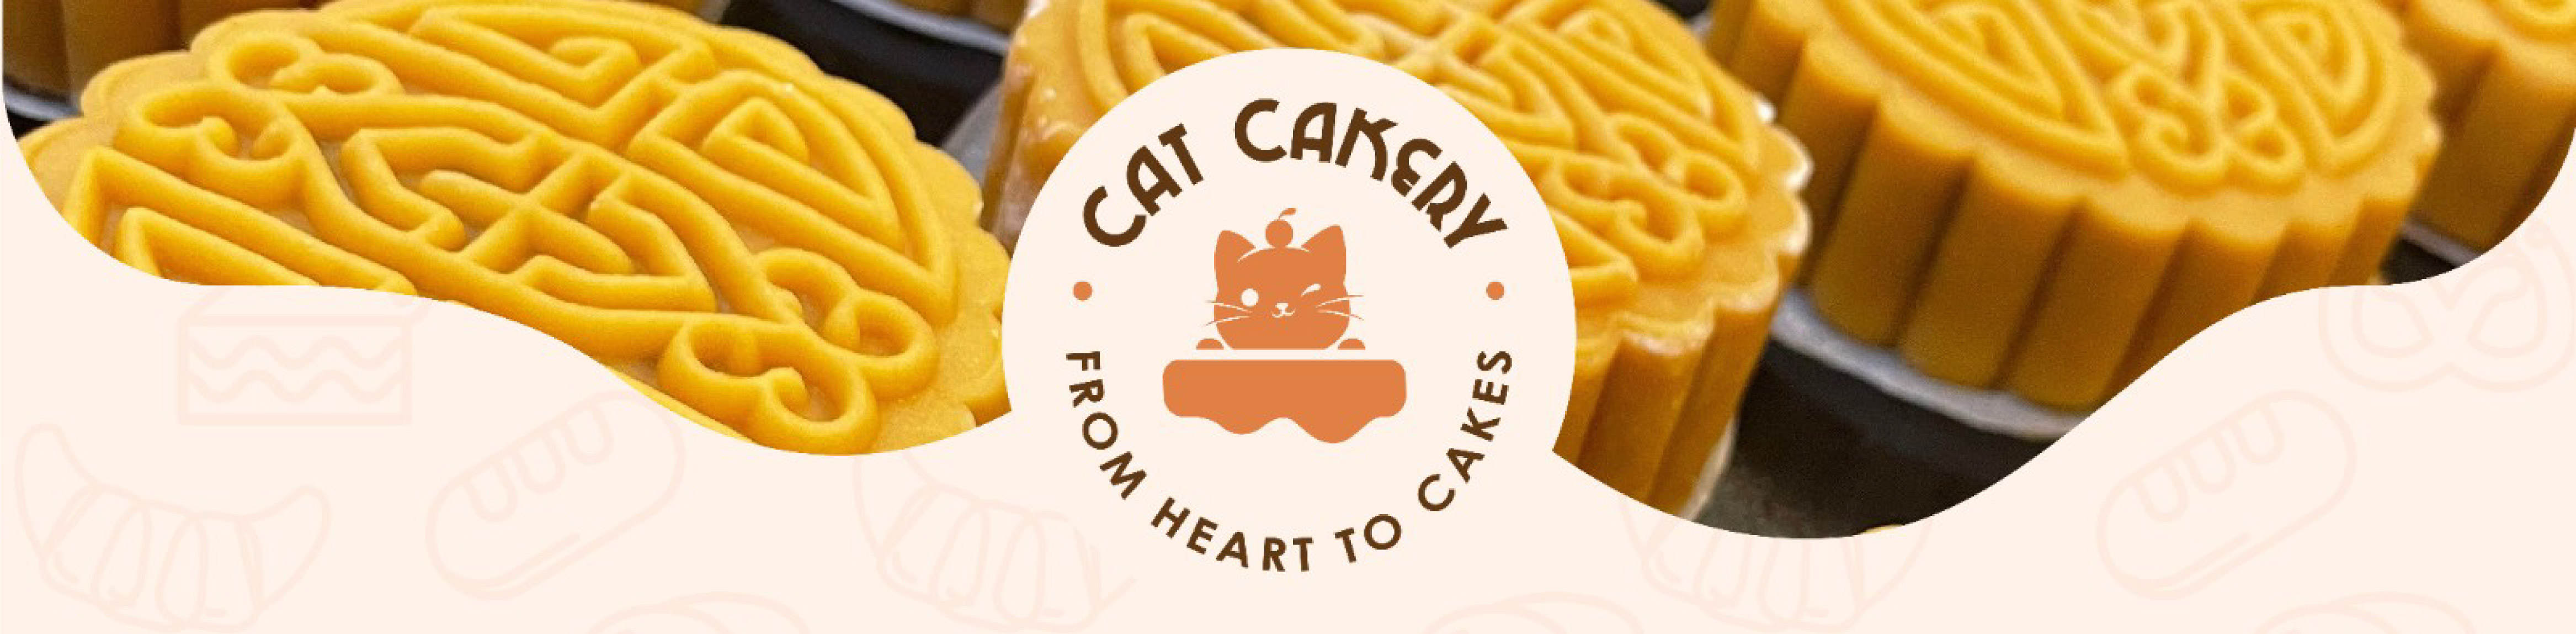 CAT CAKERY